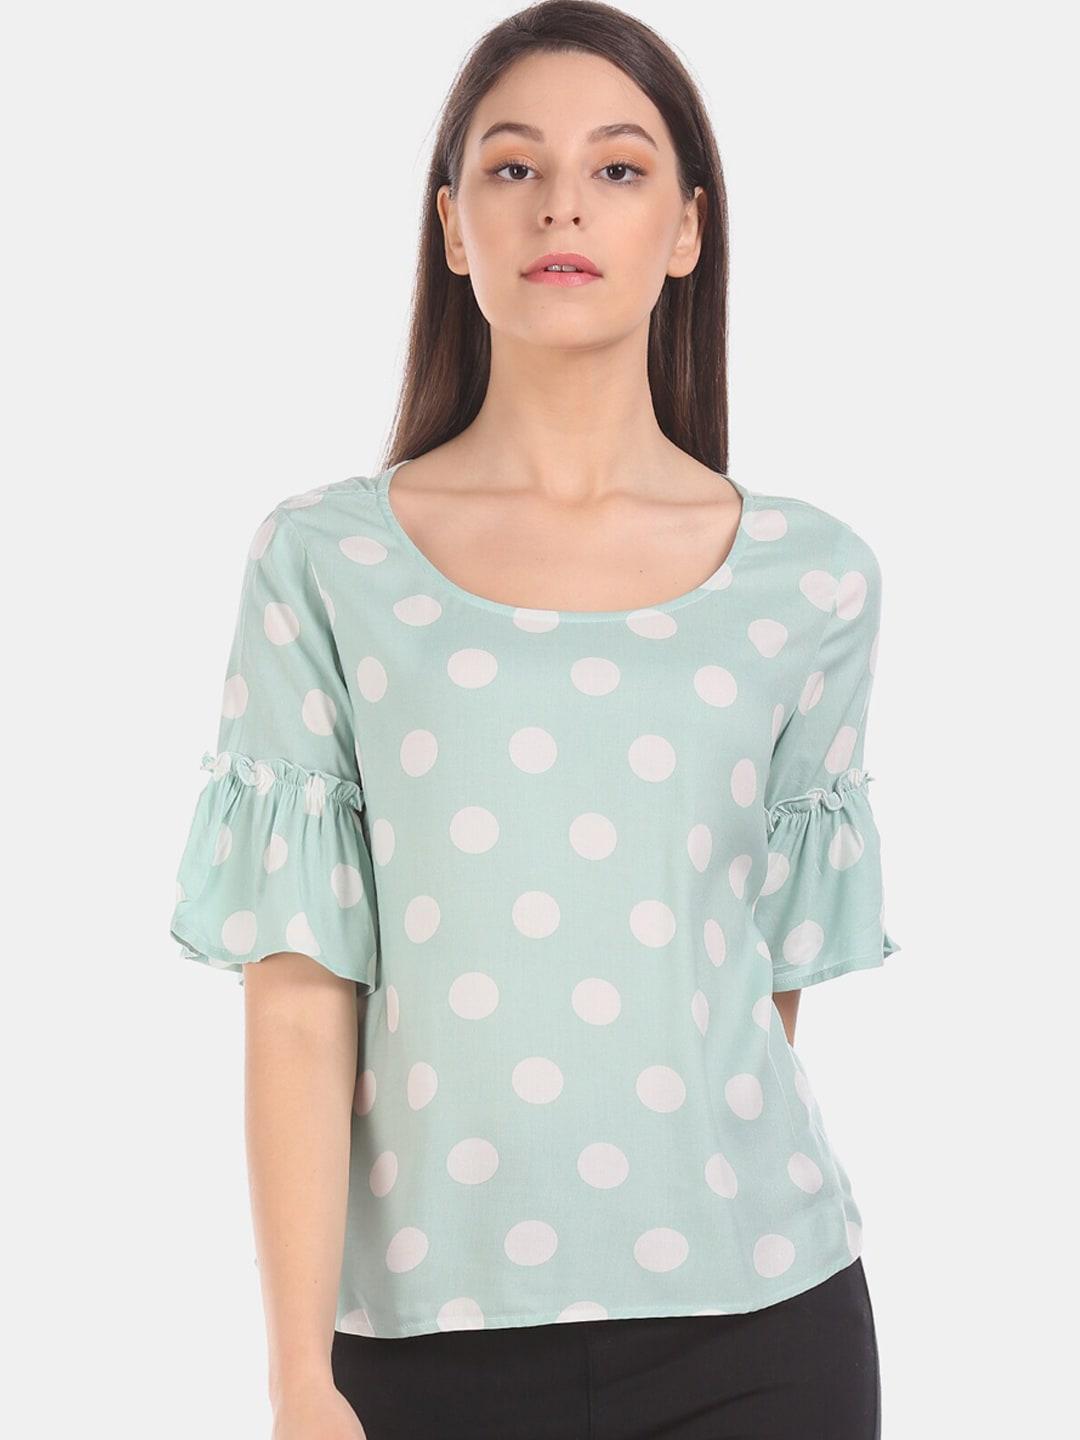 sugr-women-green-polka-dots-printed-top